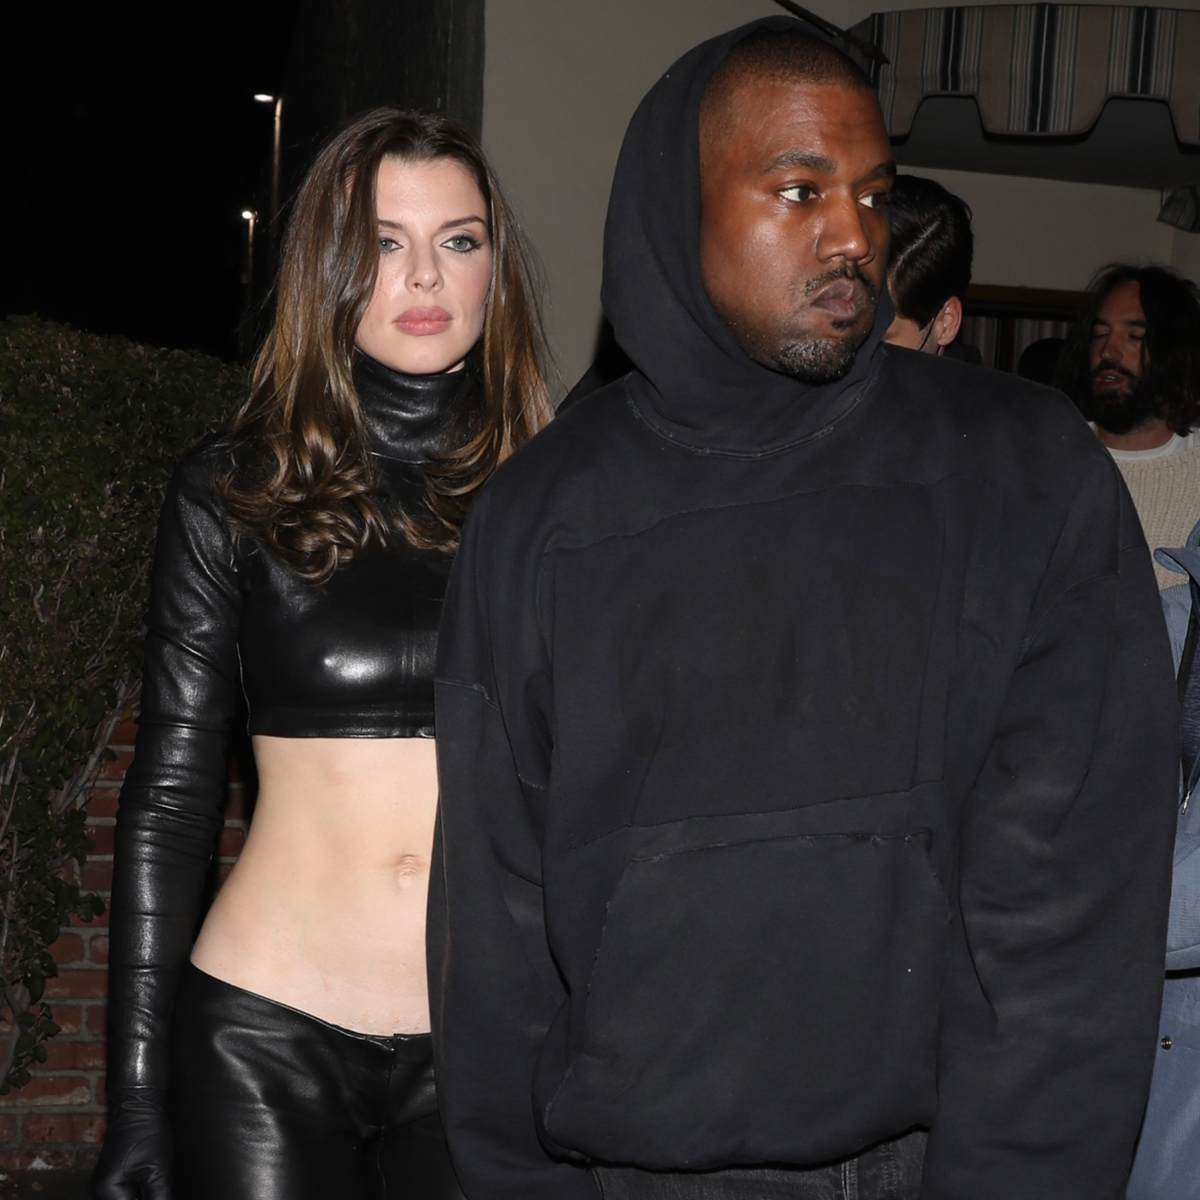 Who Is Julia Fox? Meet Kanye West's New Girlfriend